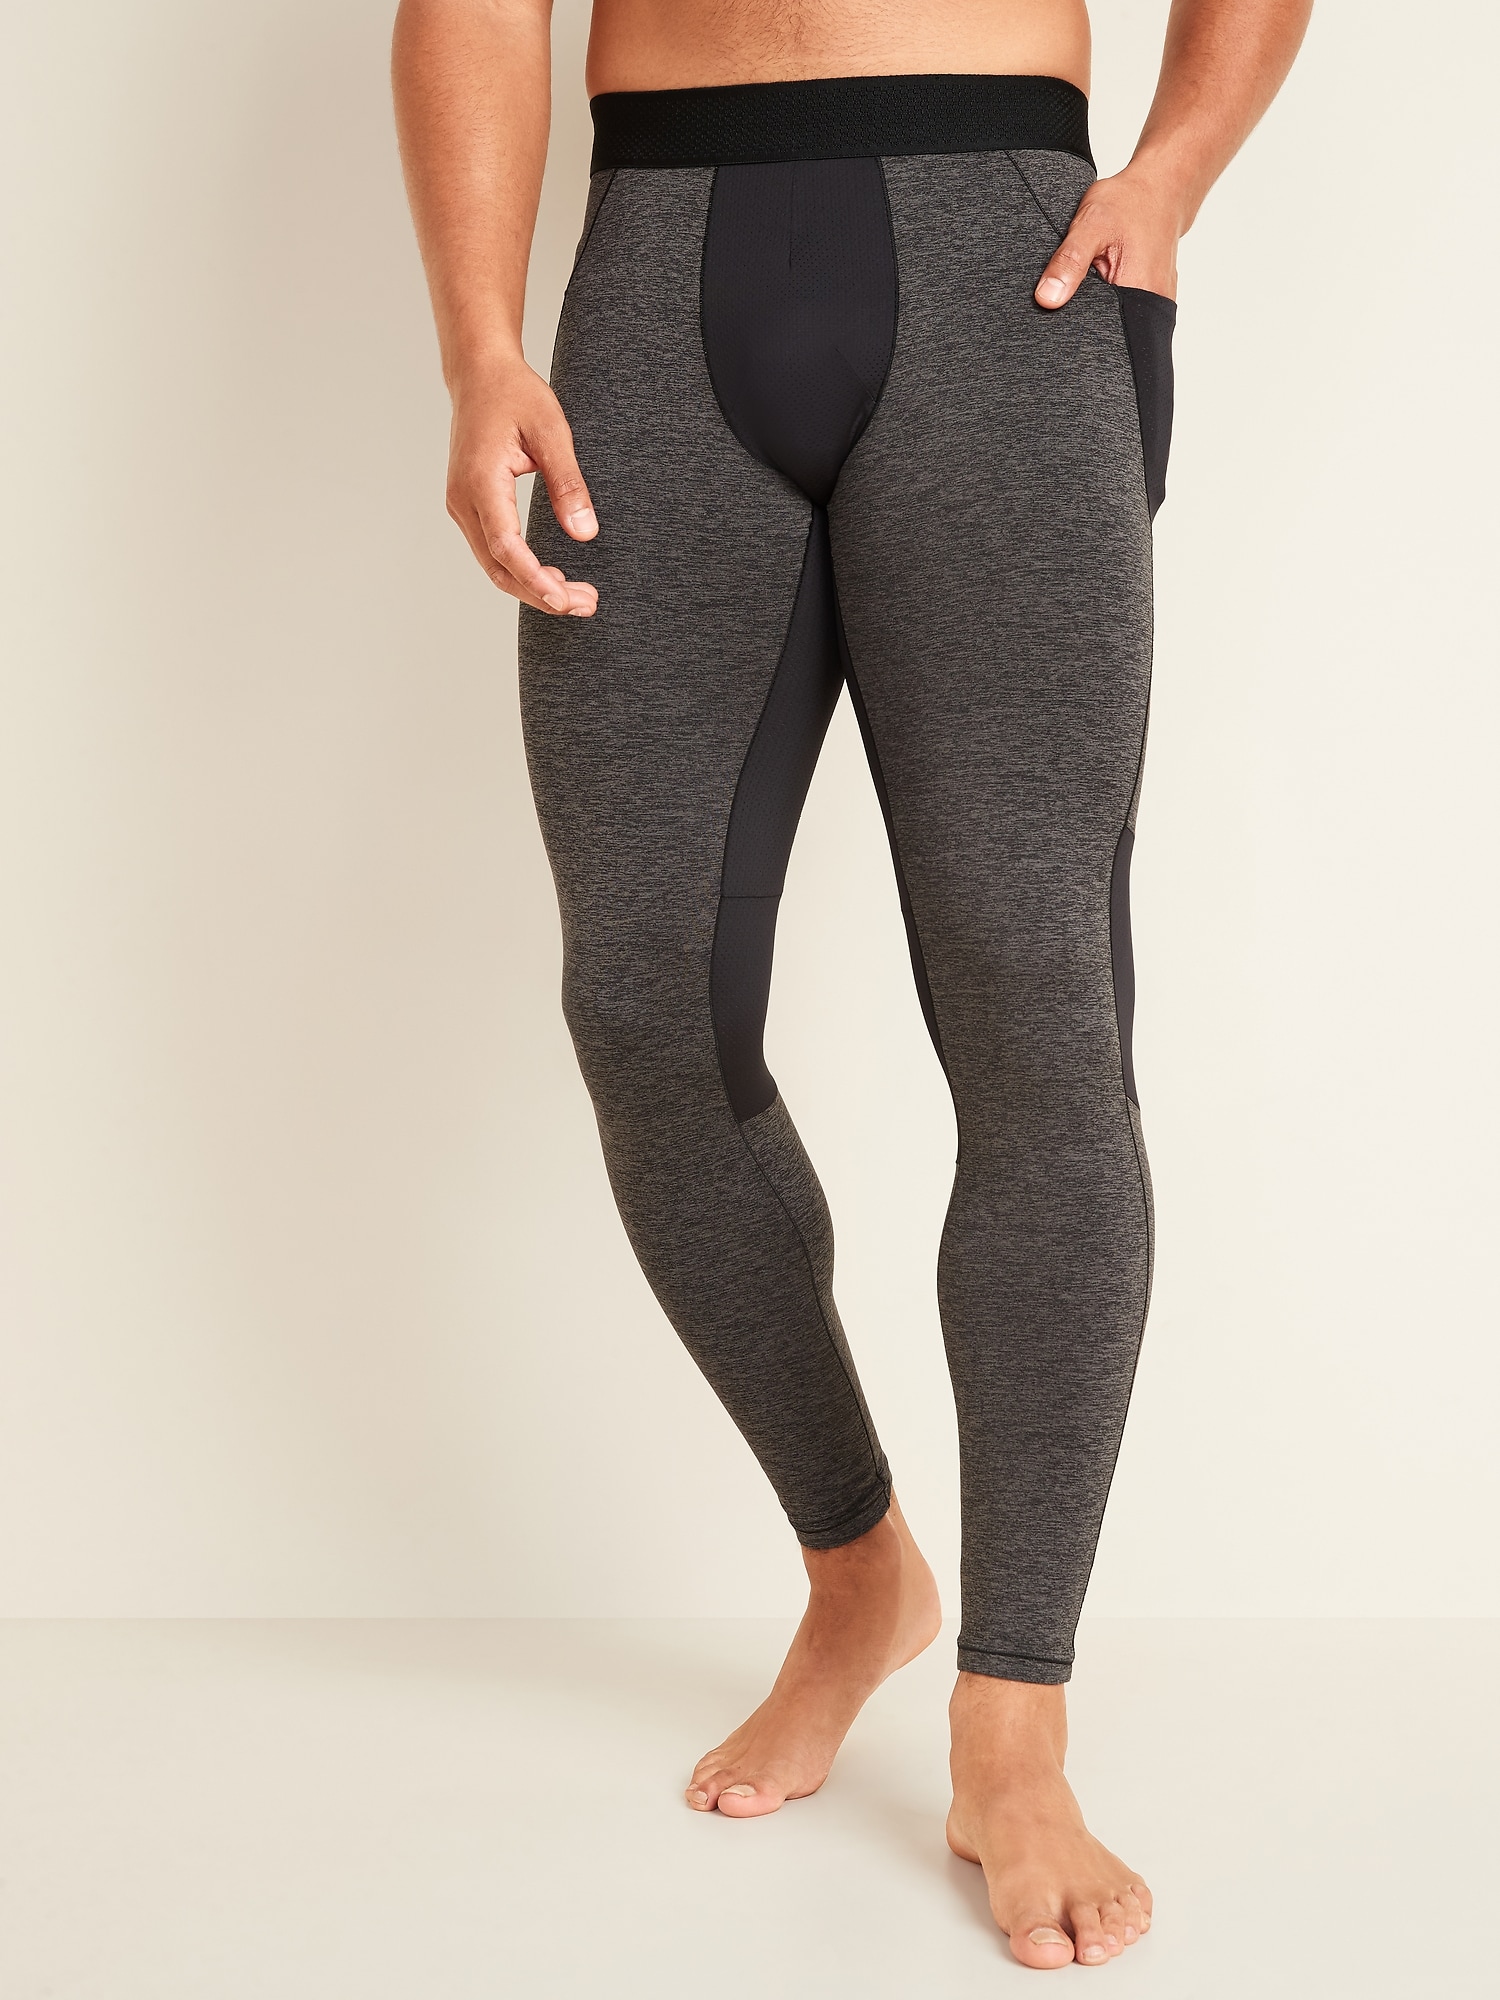 Mens Compression Pants Tights Pantyhose Sports Base Layer Running Yoga  Shapewear 